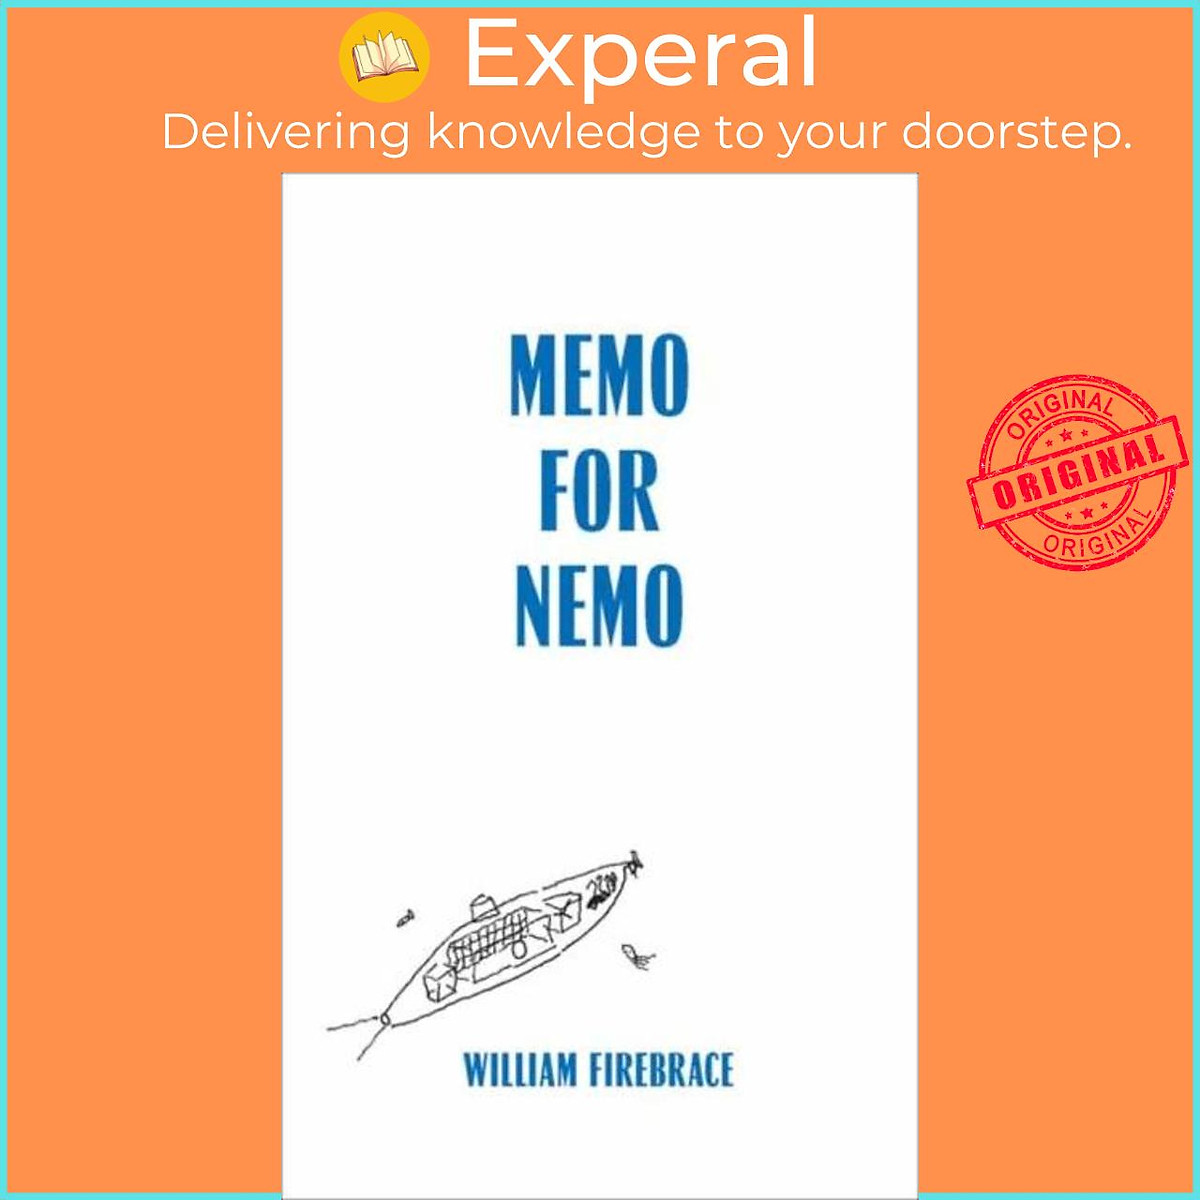 Sách - Memo for Nemo by William Firebrace (UK edition, paperback)